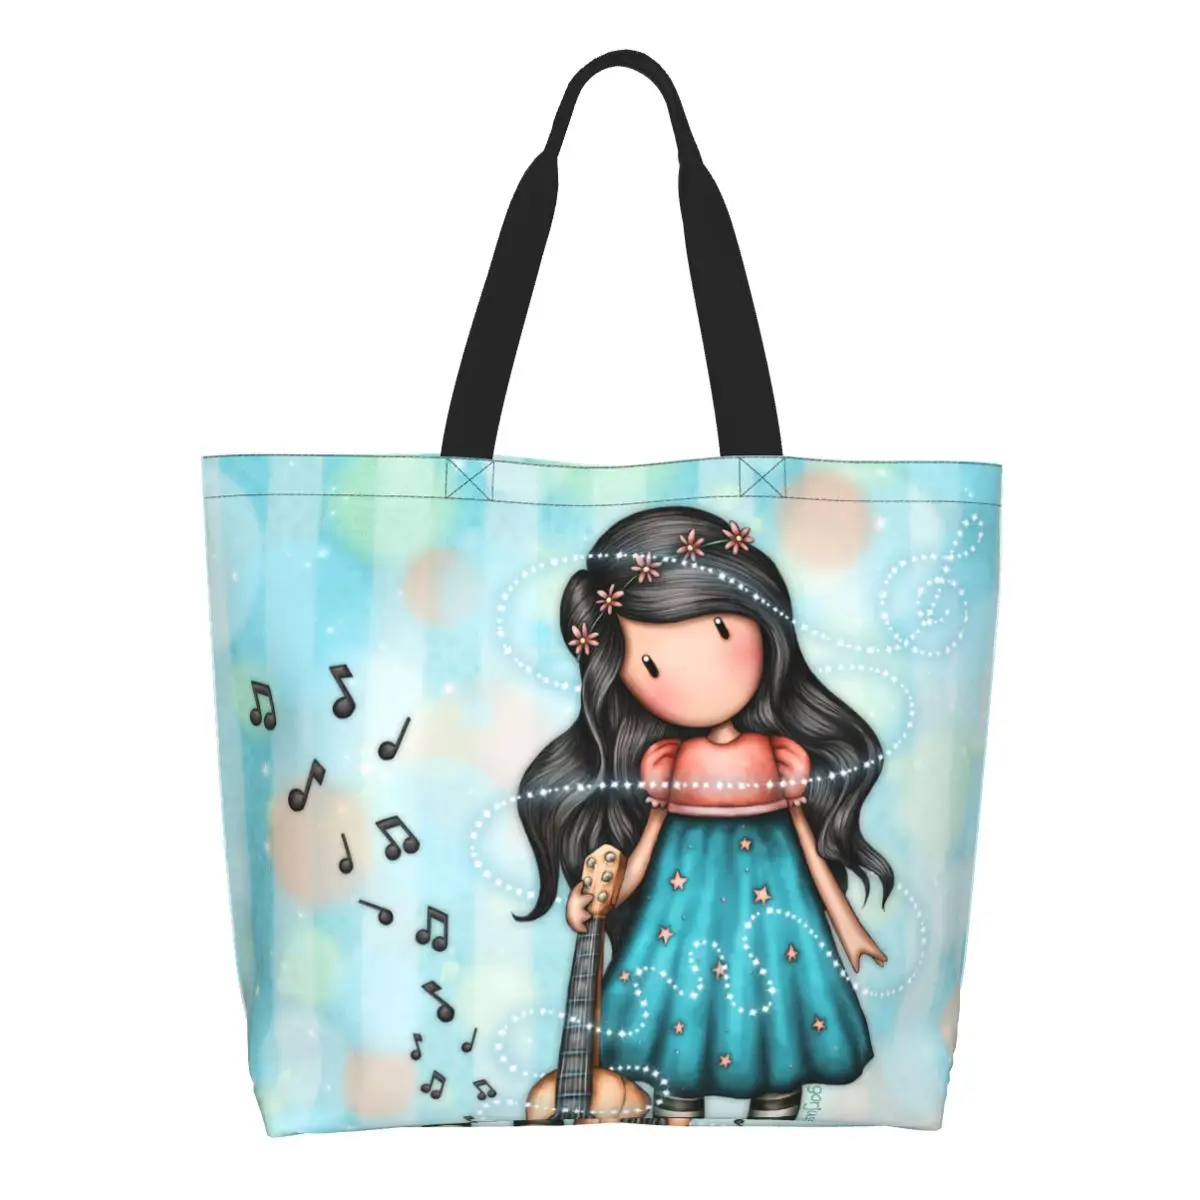 

Recycling Anime Girl Santoro Gorjuss Shopping Bag Women Shoulder Canvas Tote Bag Portable Grocery Shopper Bags